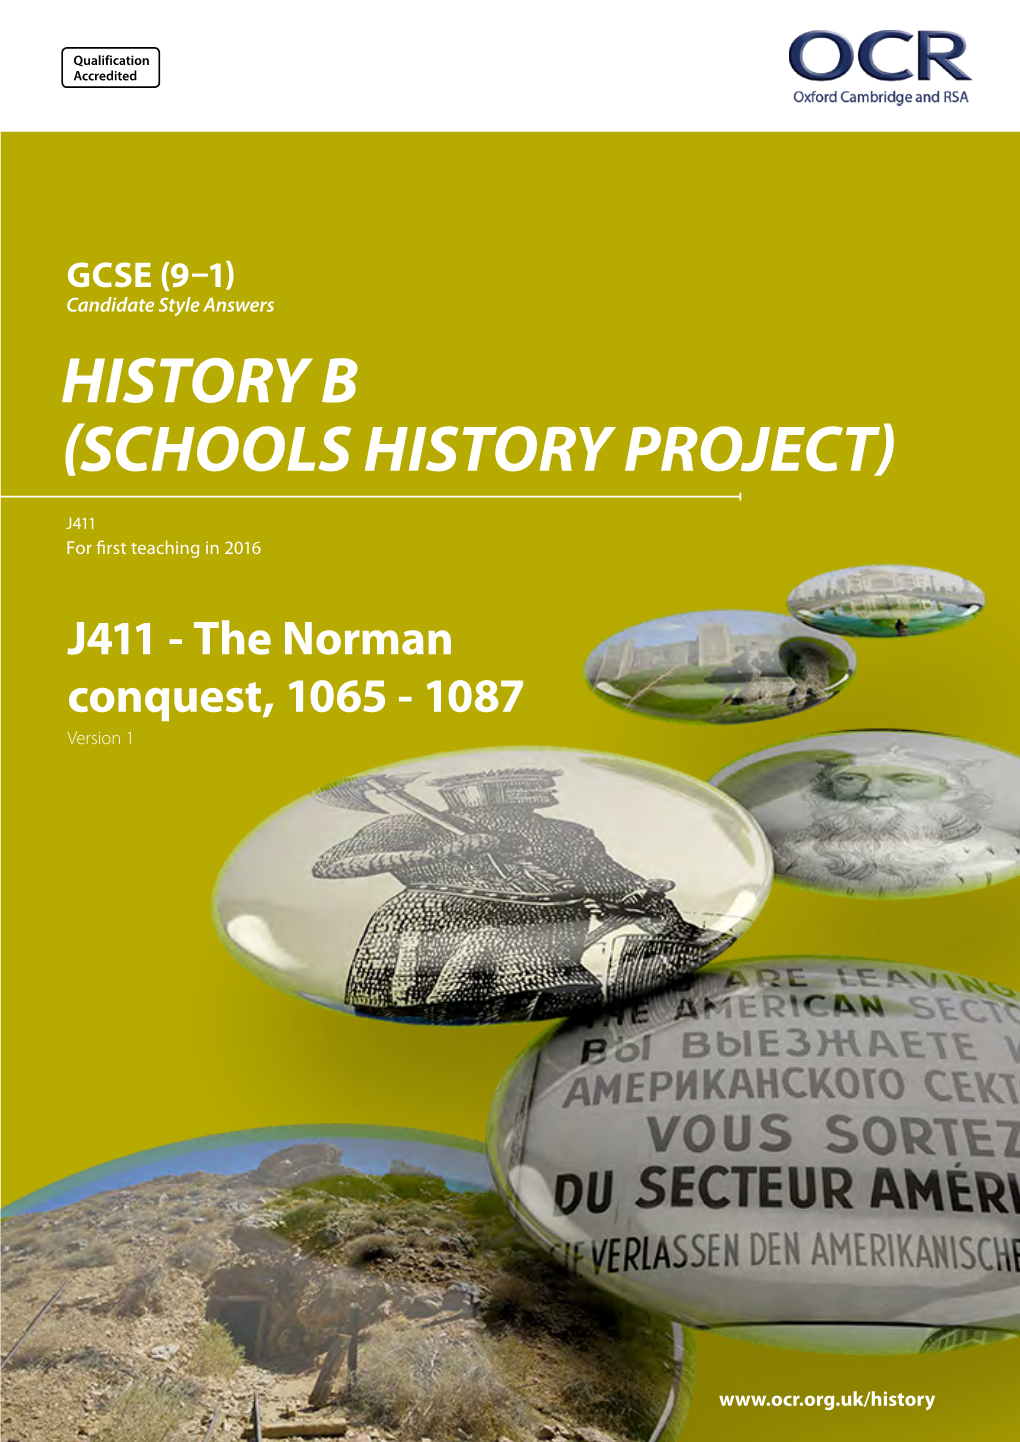 (Schools History Project) the Norman Conquest, 1065